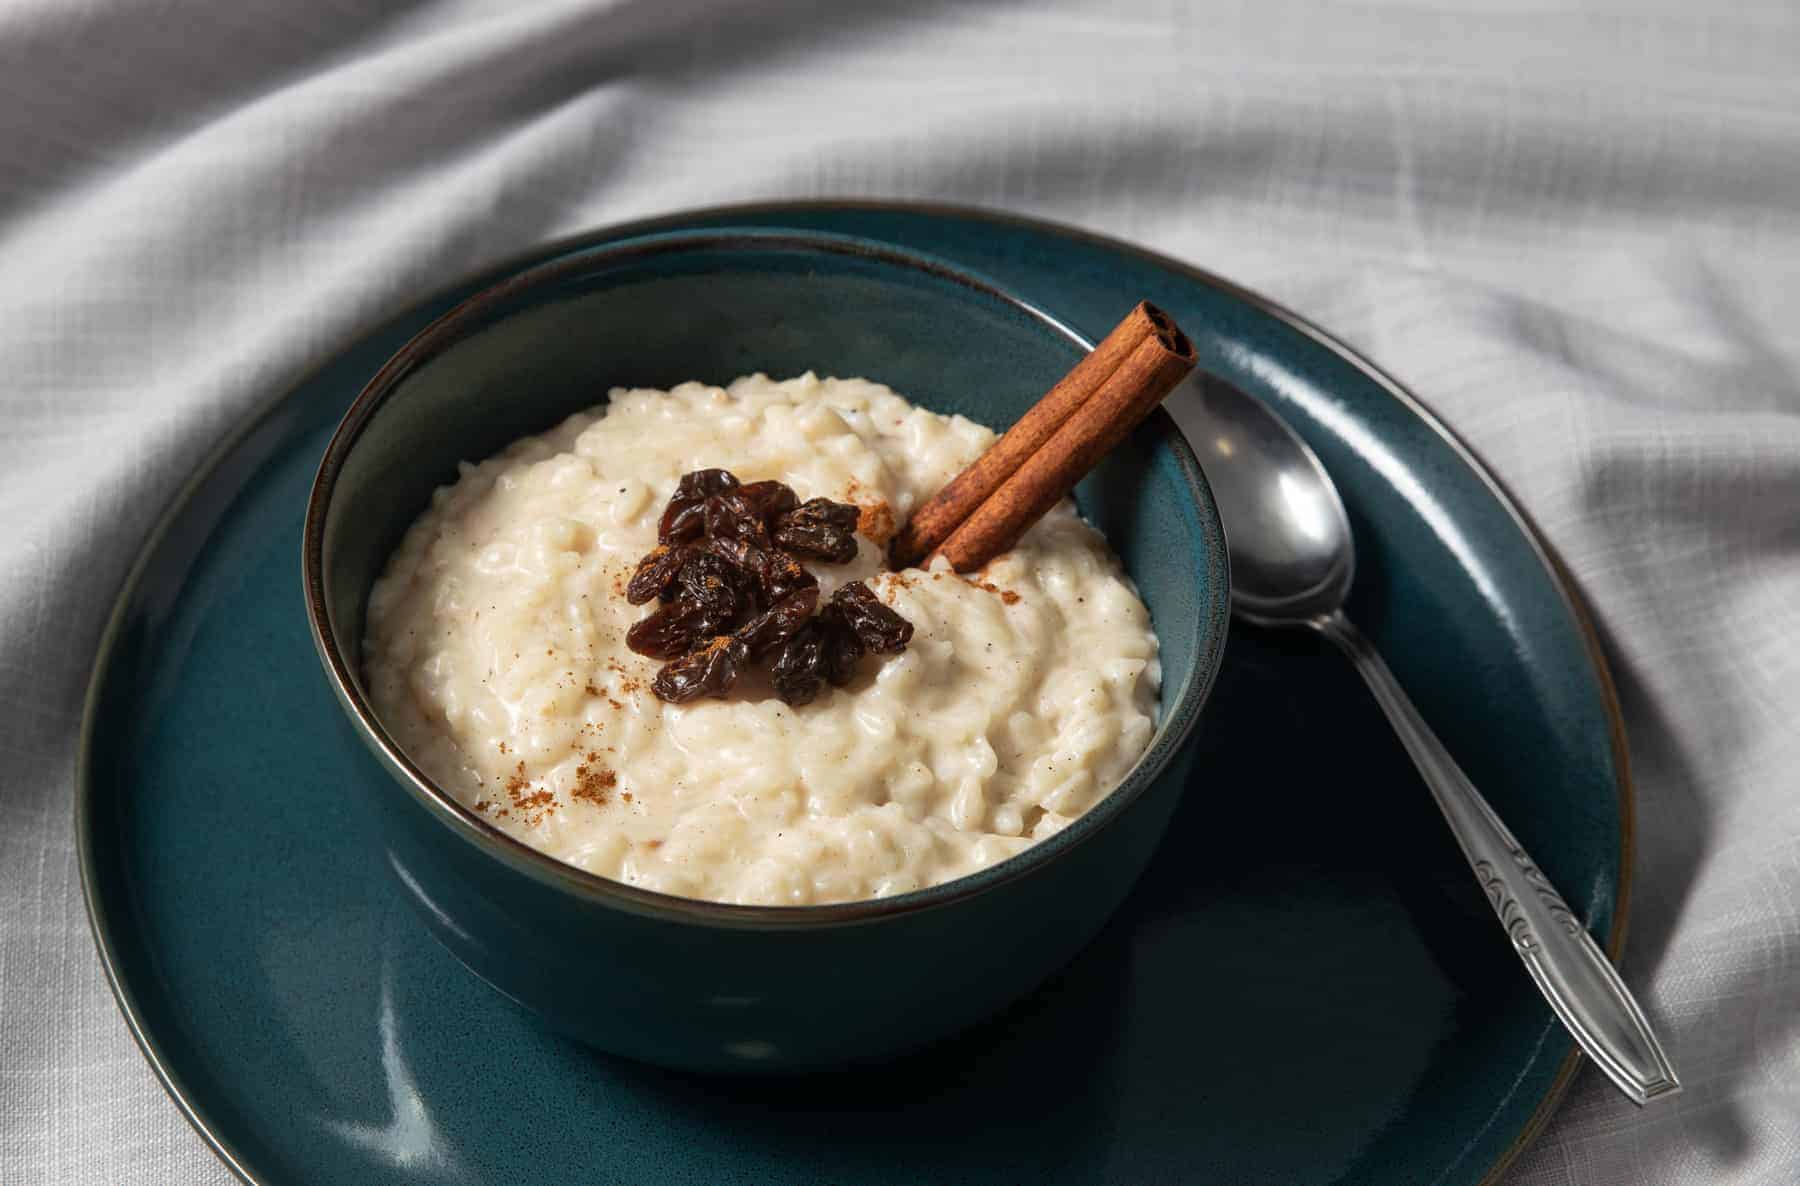 https://www.pressurecookrecipes.com/wp-content/uploads/2018/09/instant-pot-rice-pudding.jpg